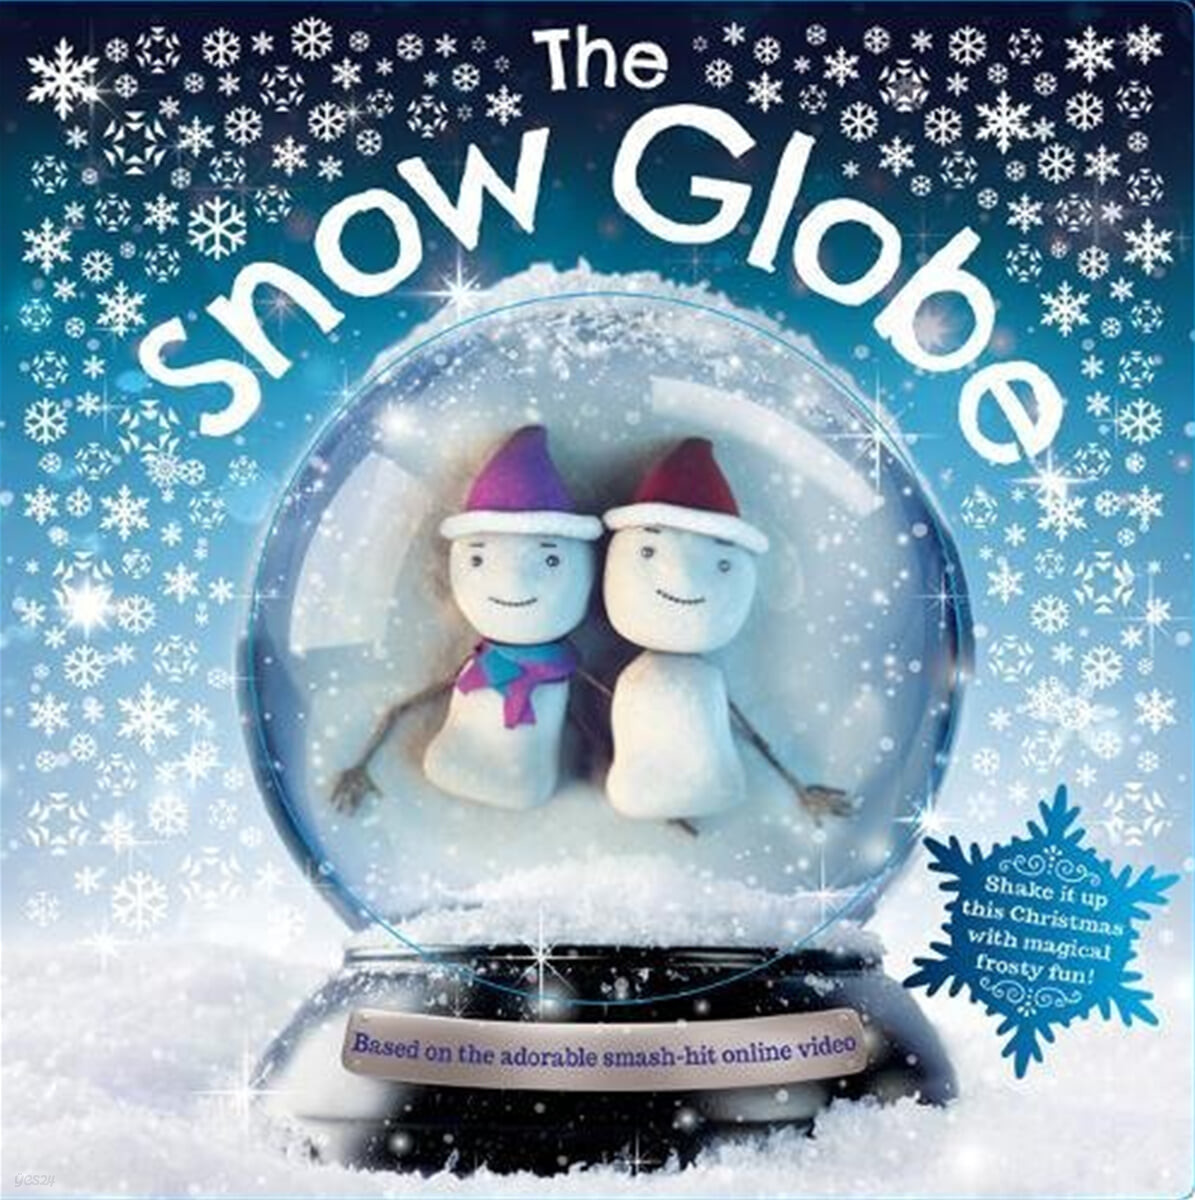 (The) snow globe